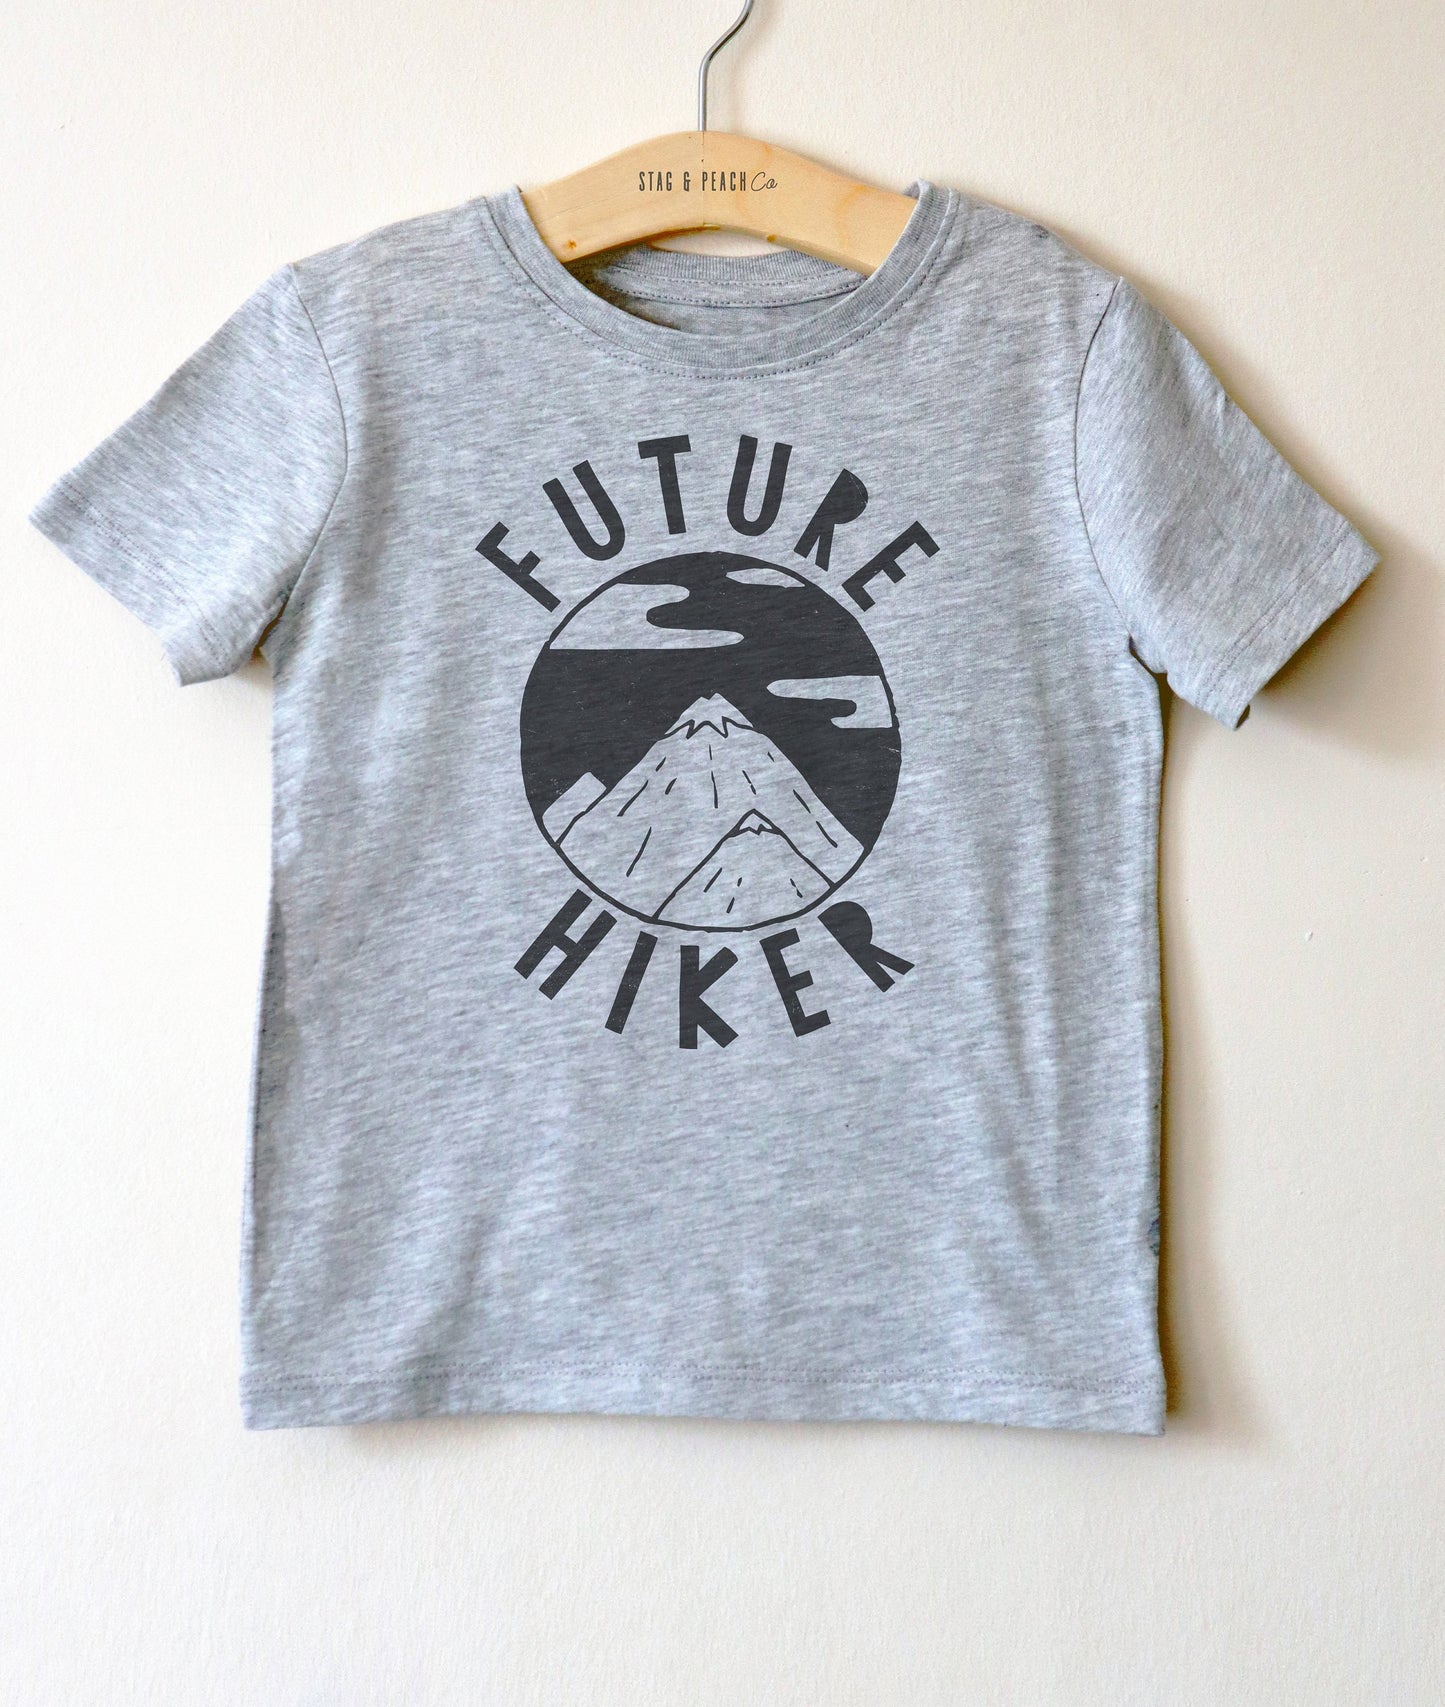 Future Hiker Kids Shirt - Hiking Shirt, Adventure Time Toddlers Shirt, Wanderlust Shirt, Adventure Awaits Youth Shirt, Mountain Shirt,